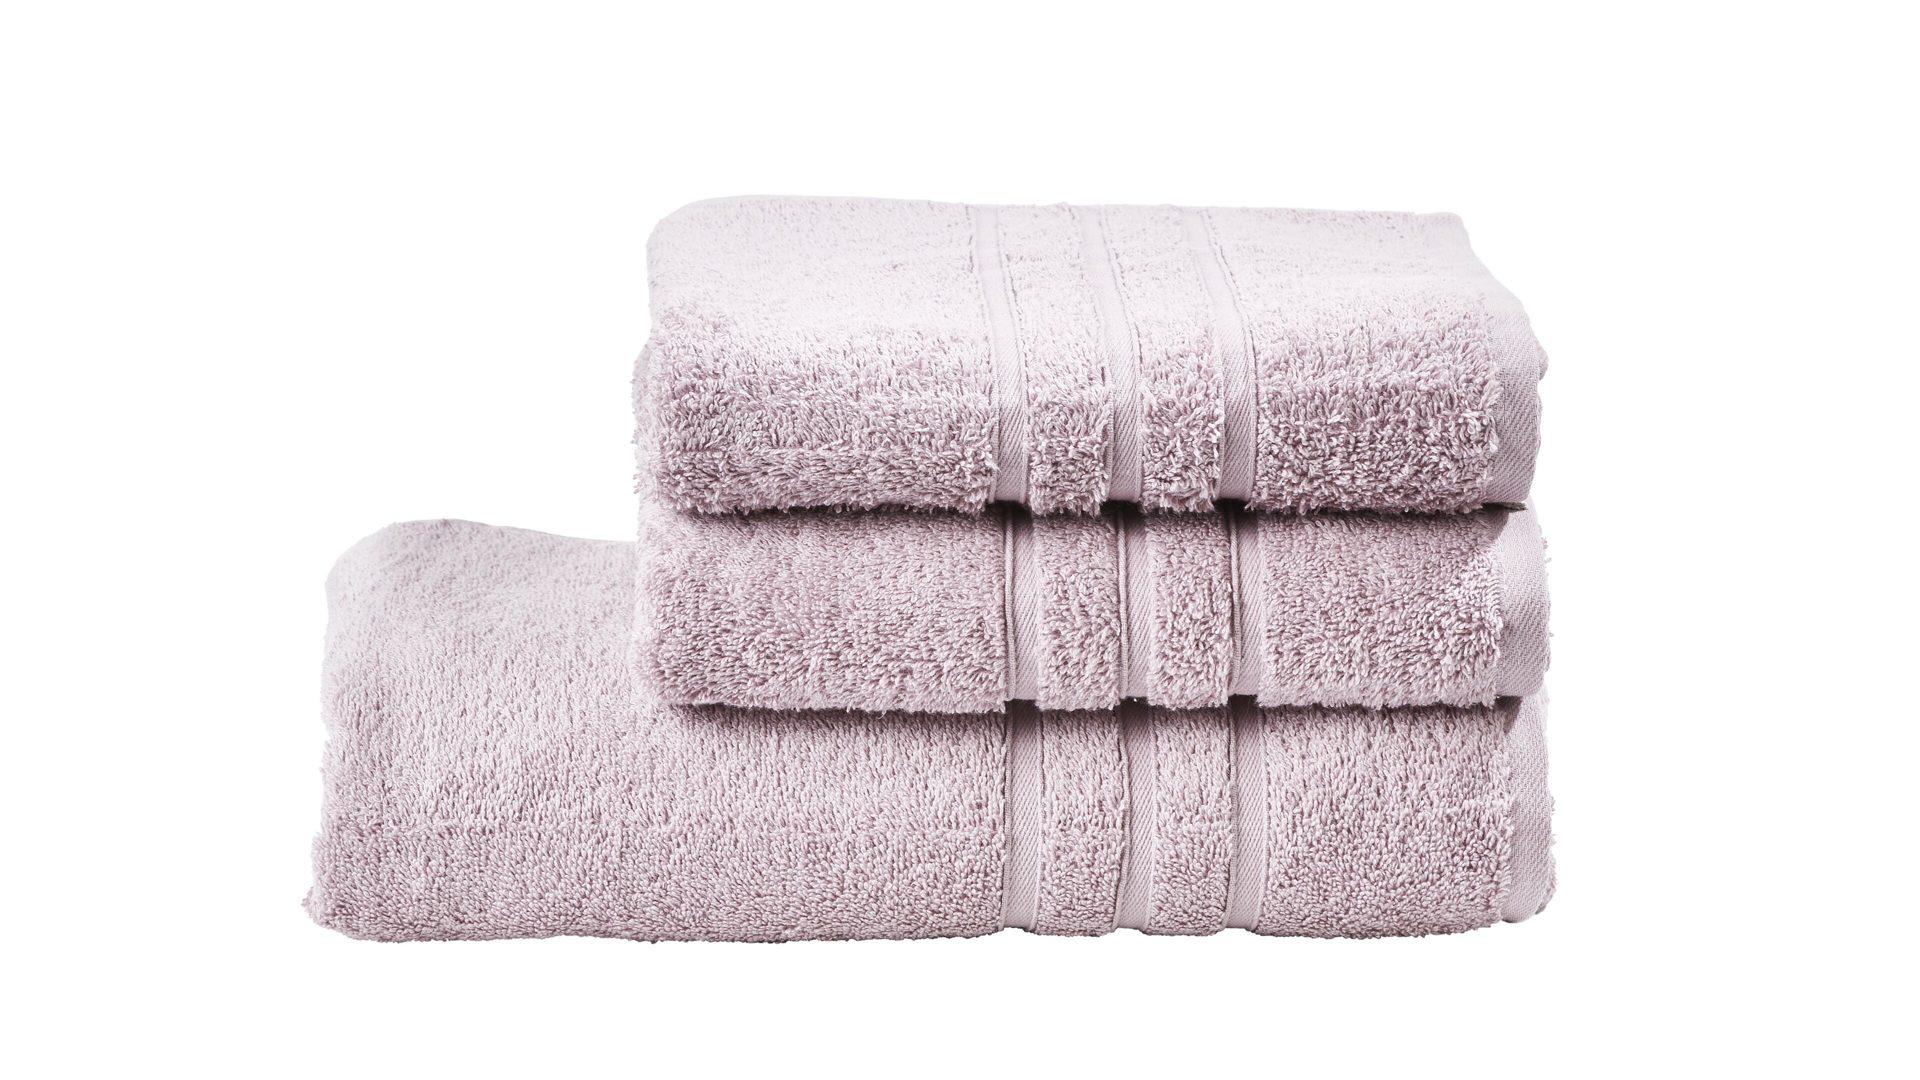 Handtuch-Set Done® by karabel home company aus Stoff in Pink DONE® Handtuch-Set Daily Uni altrosafarbene Baumwolle – dreiteilig